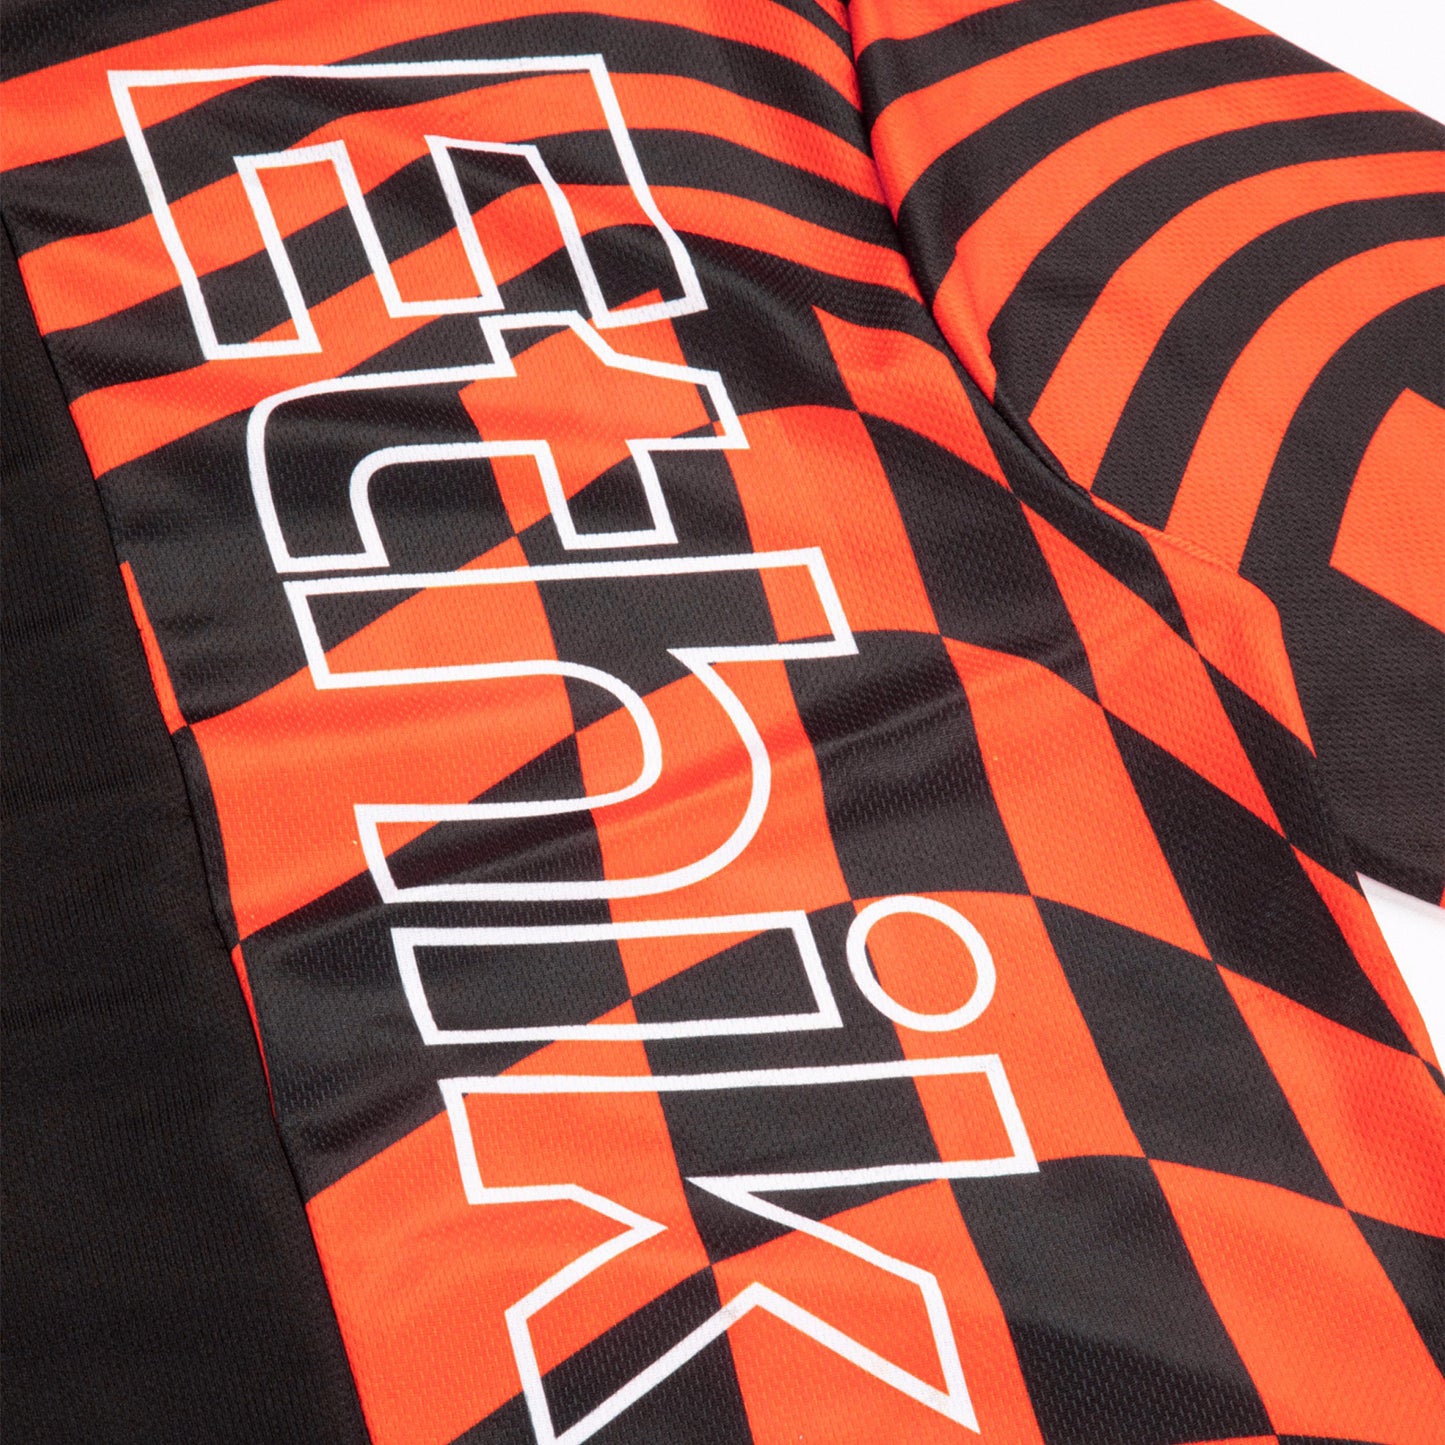 Racing Jersey |  Black/Orange